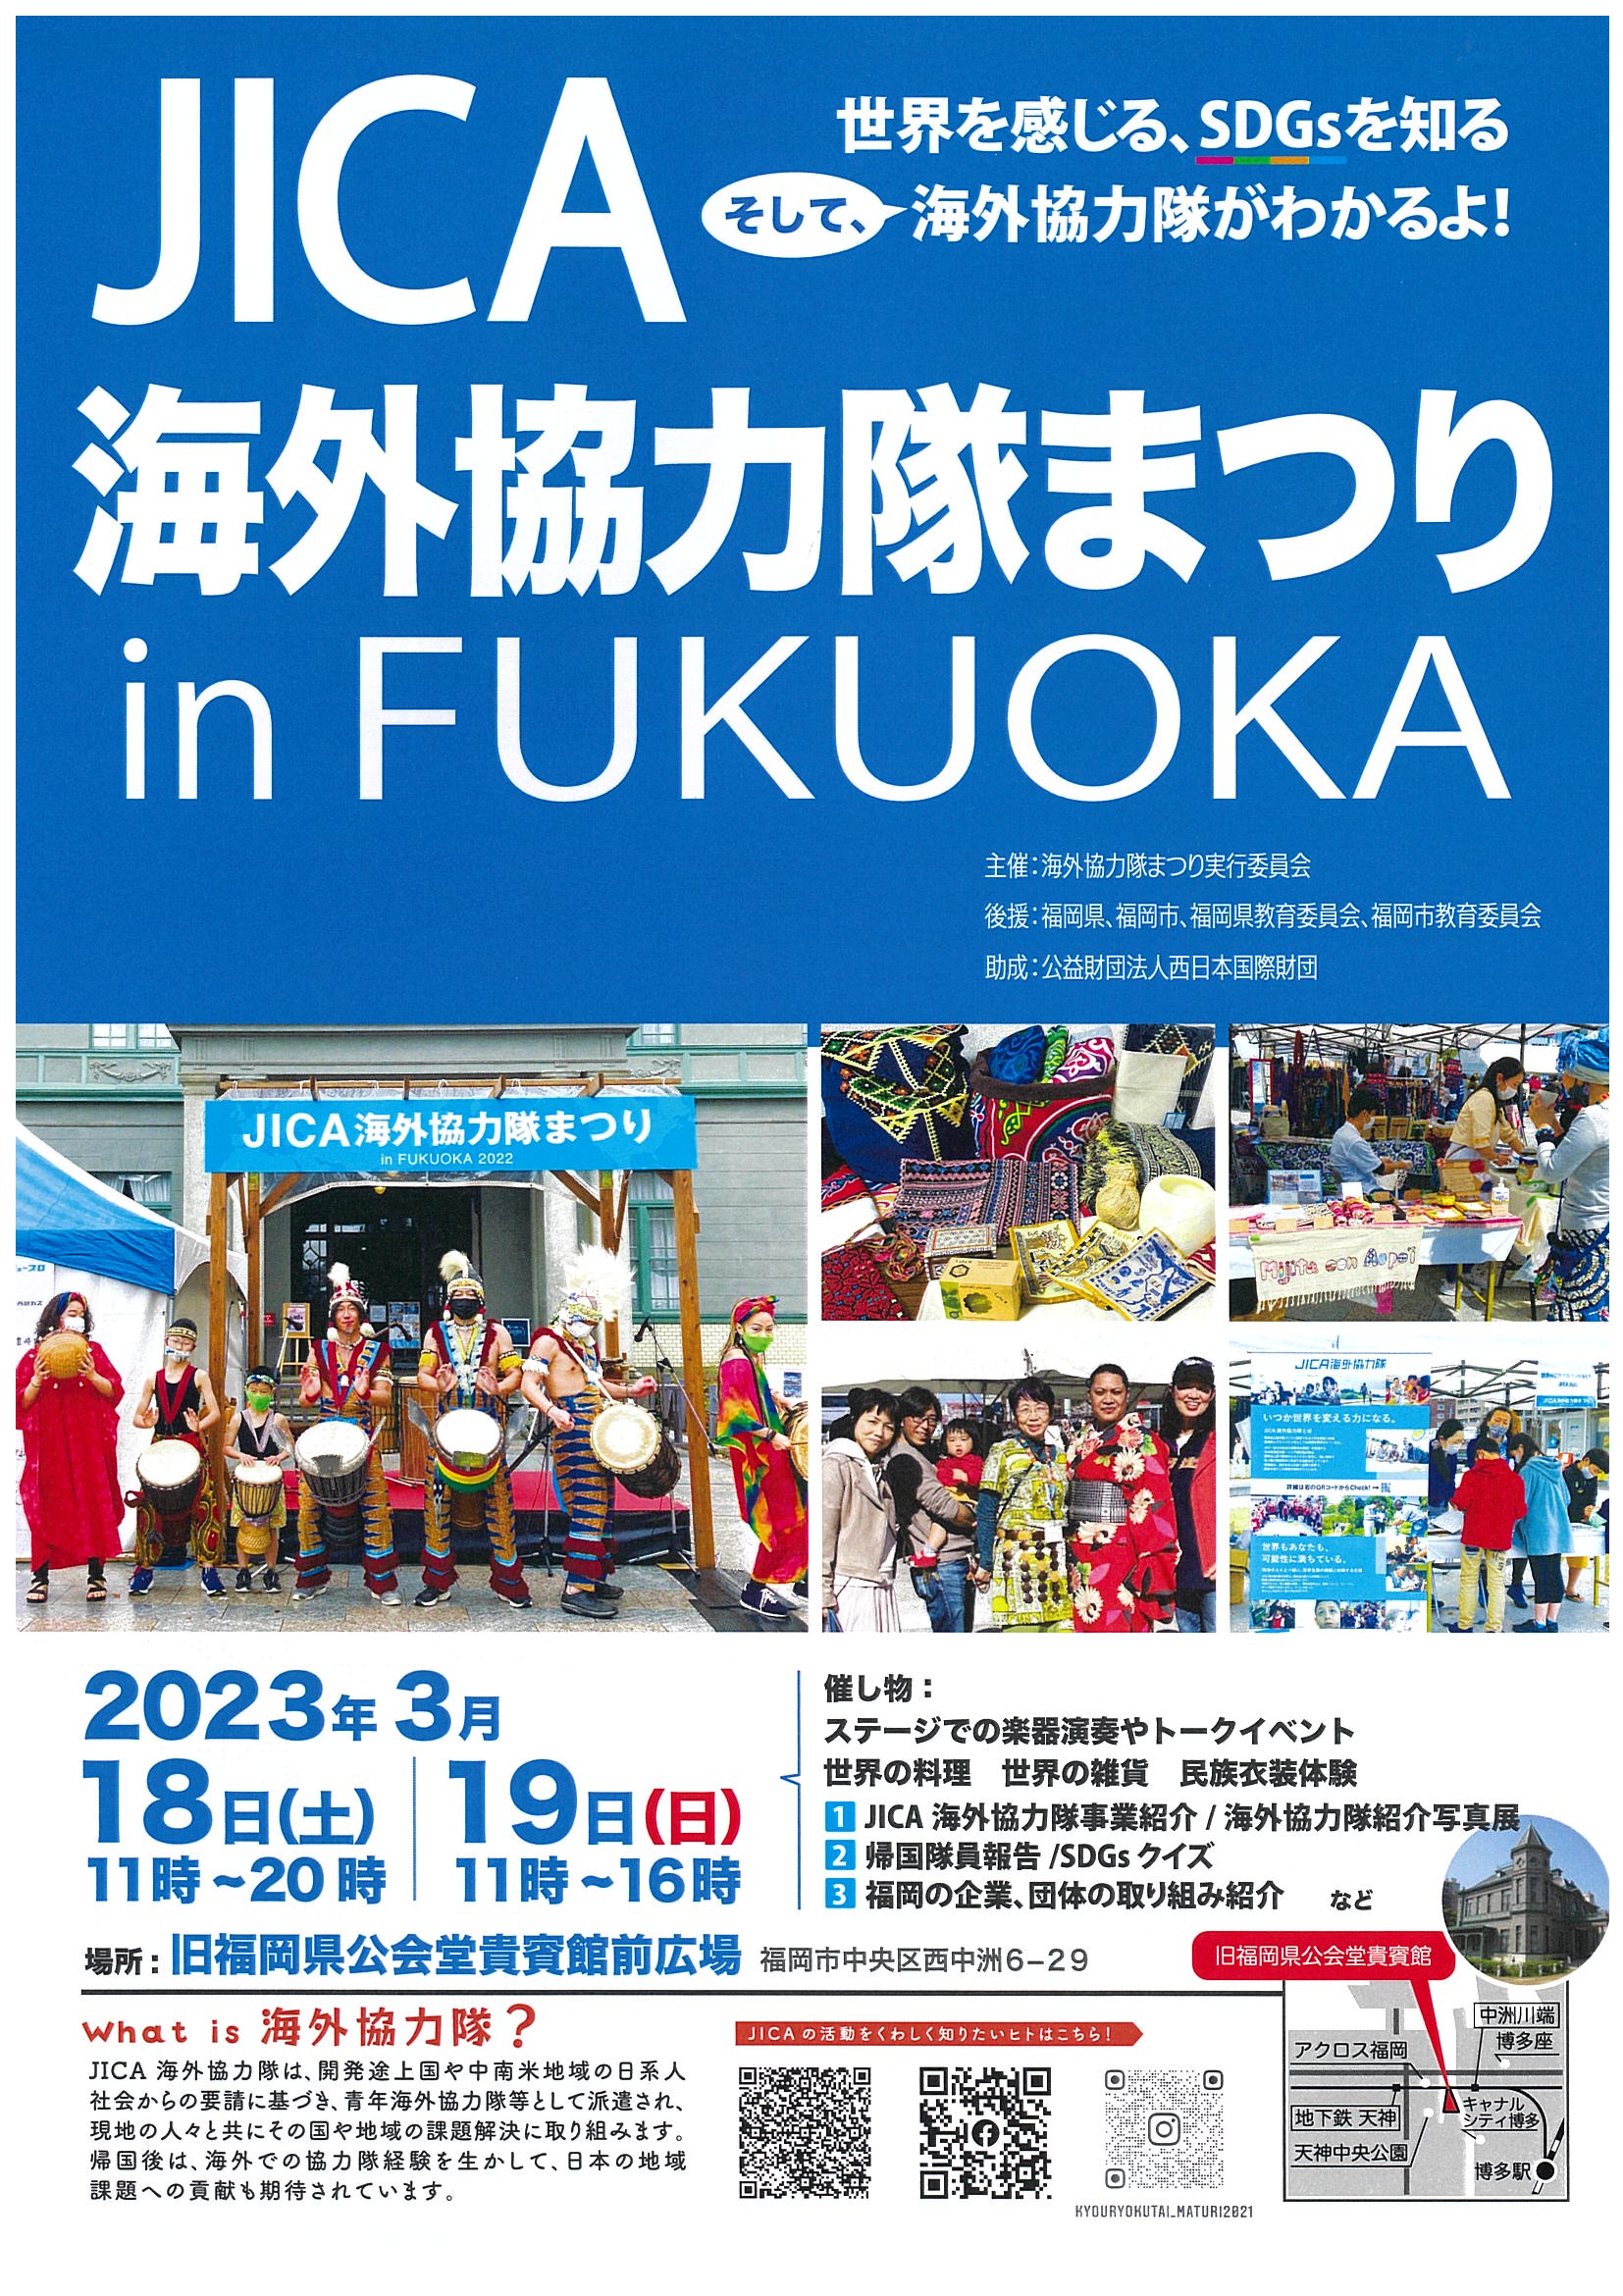 JICA海外協力隊まつり in FUKUOKA2023 開催のお知らせ。